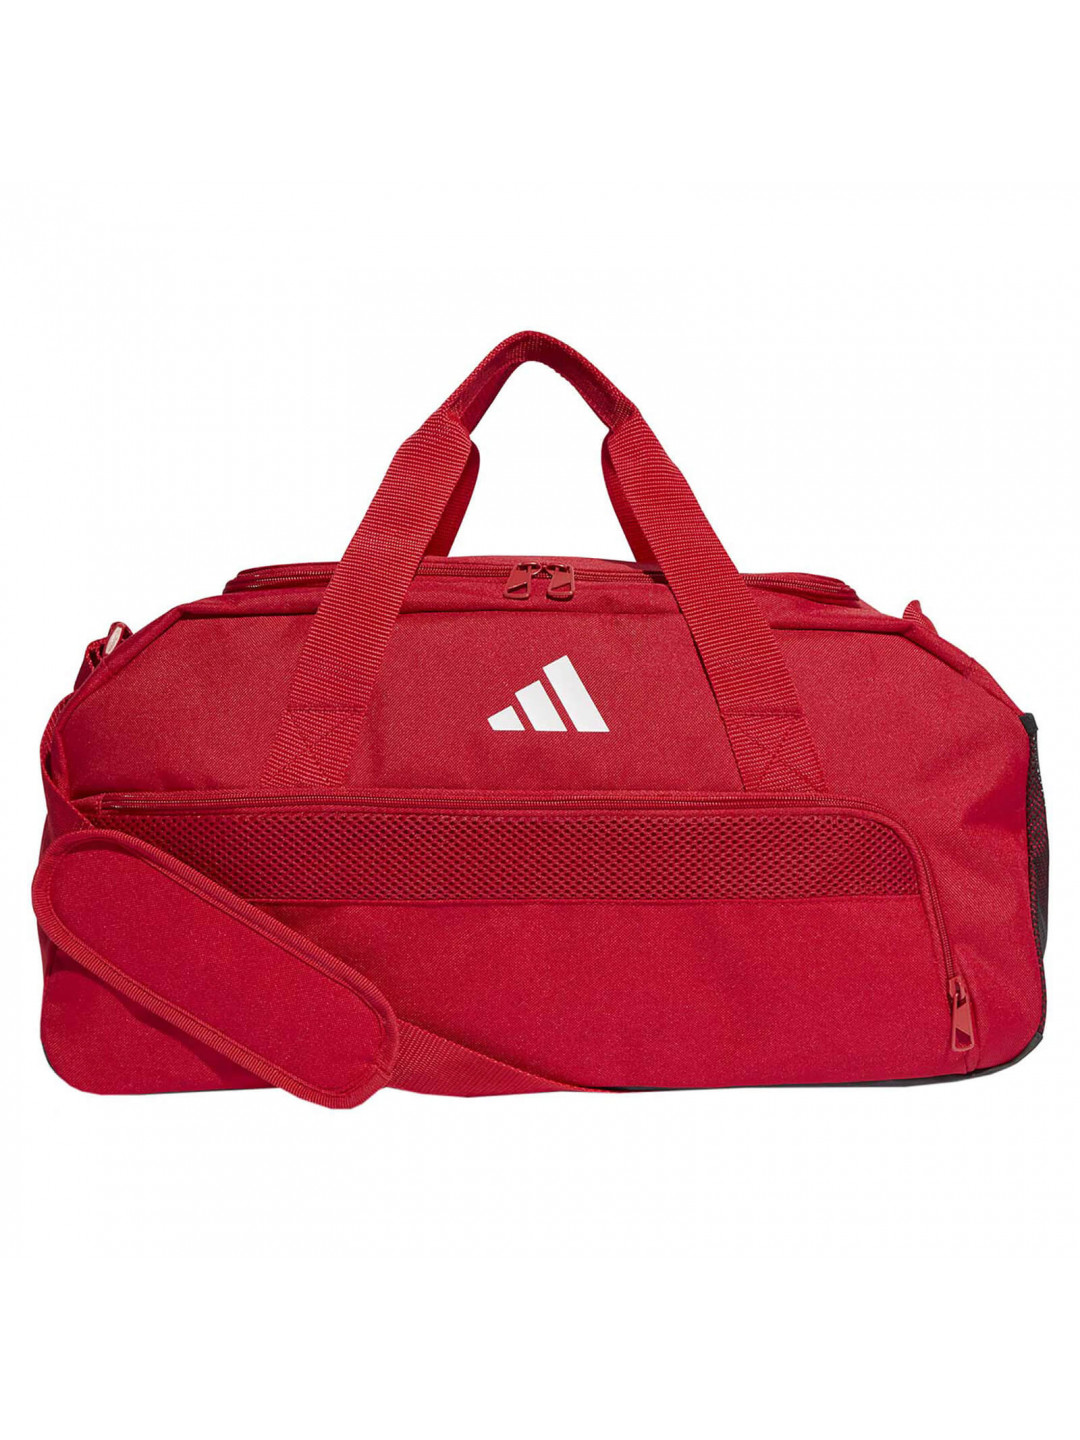 Sportovní taška Adidas Philip – červená